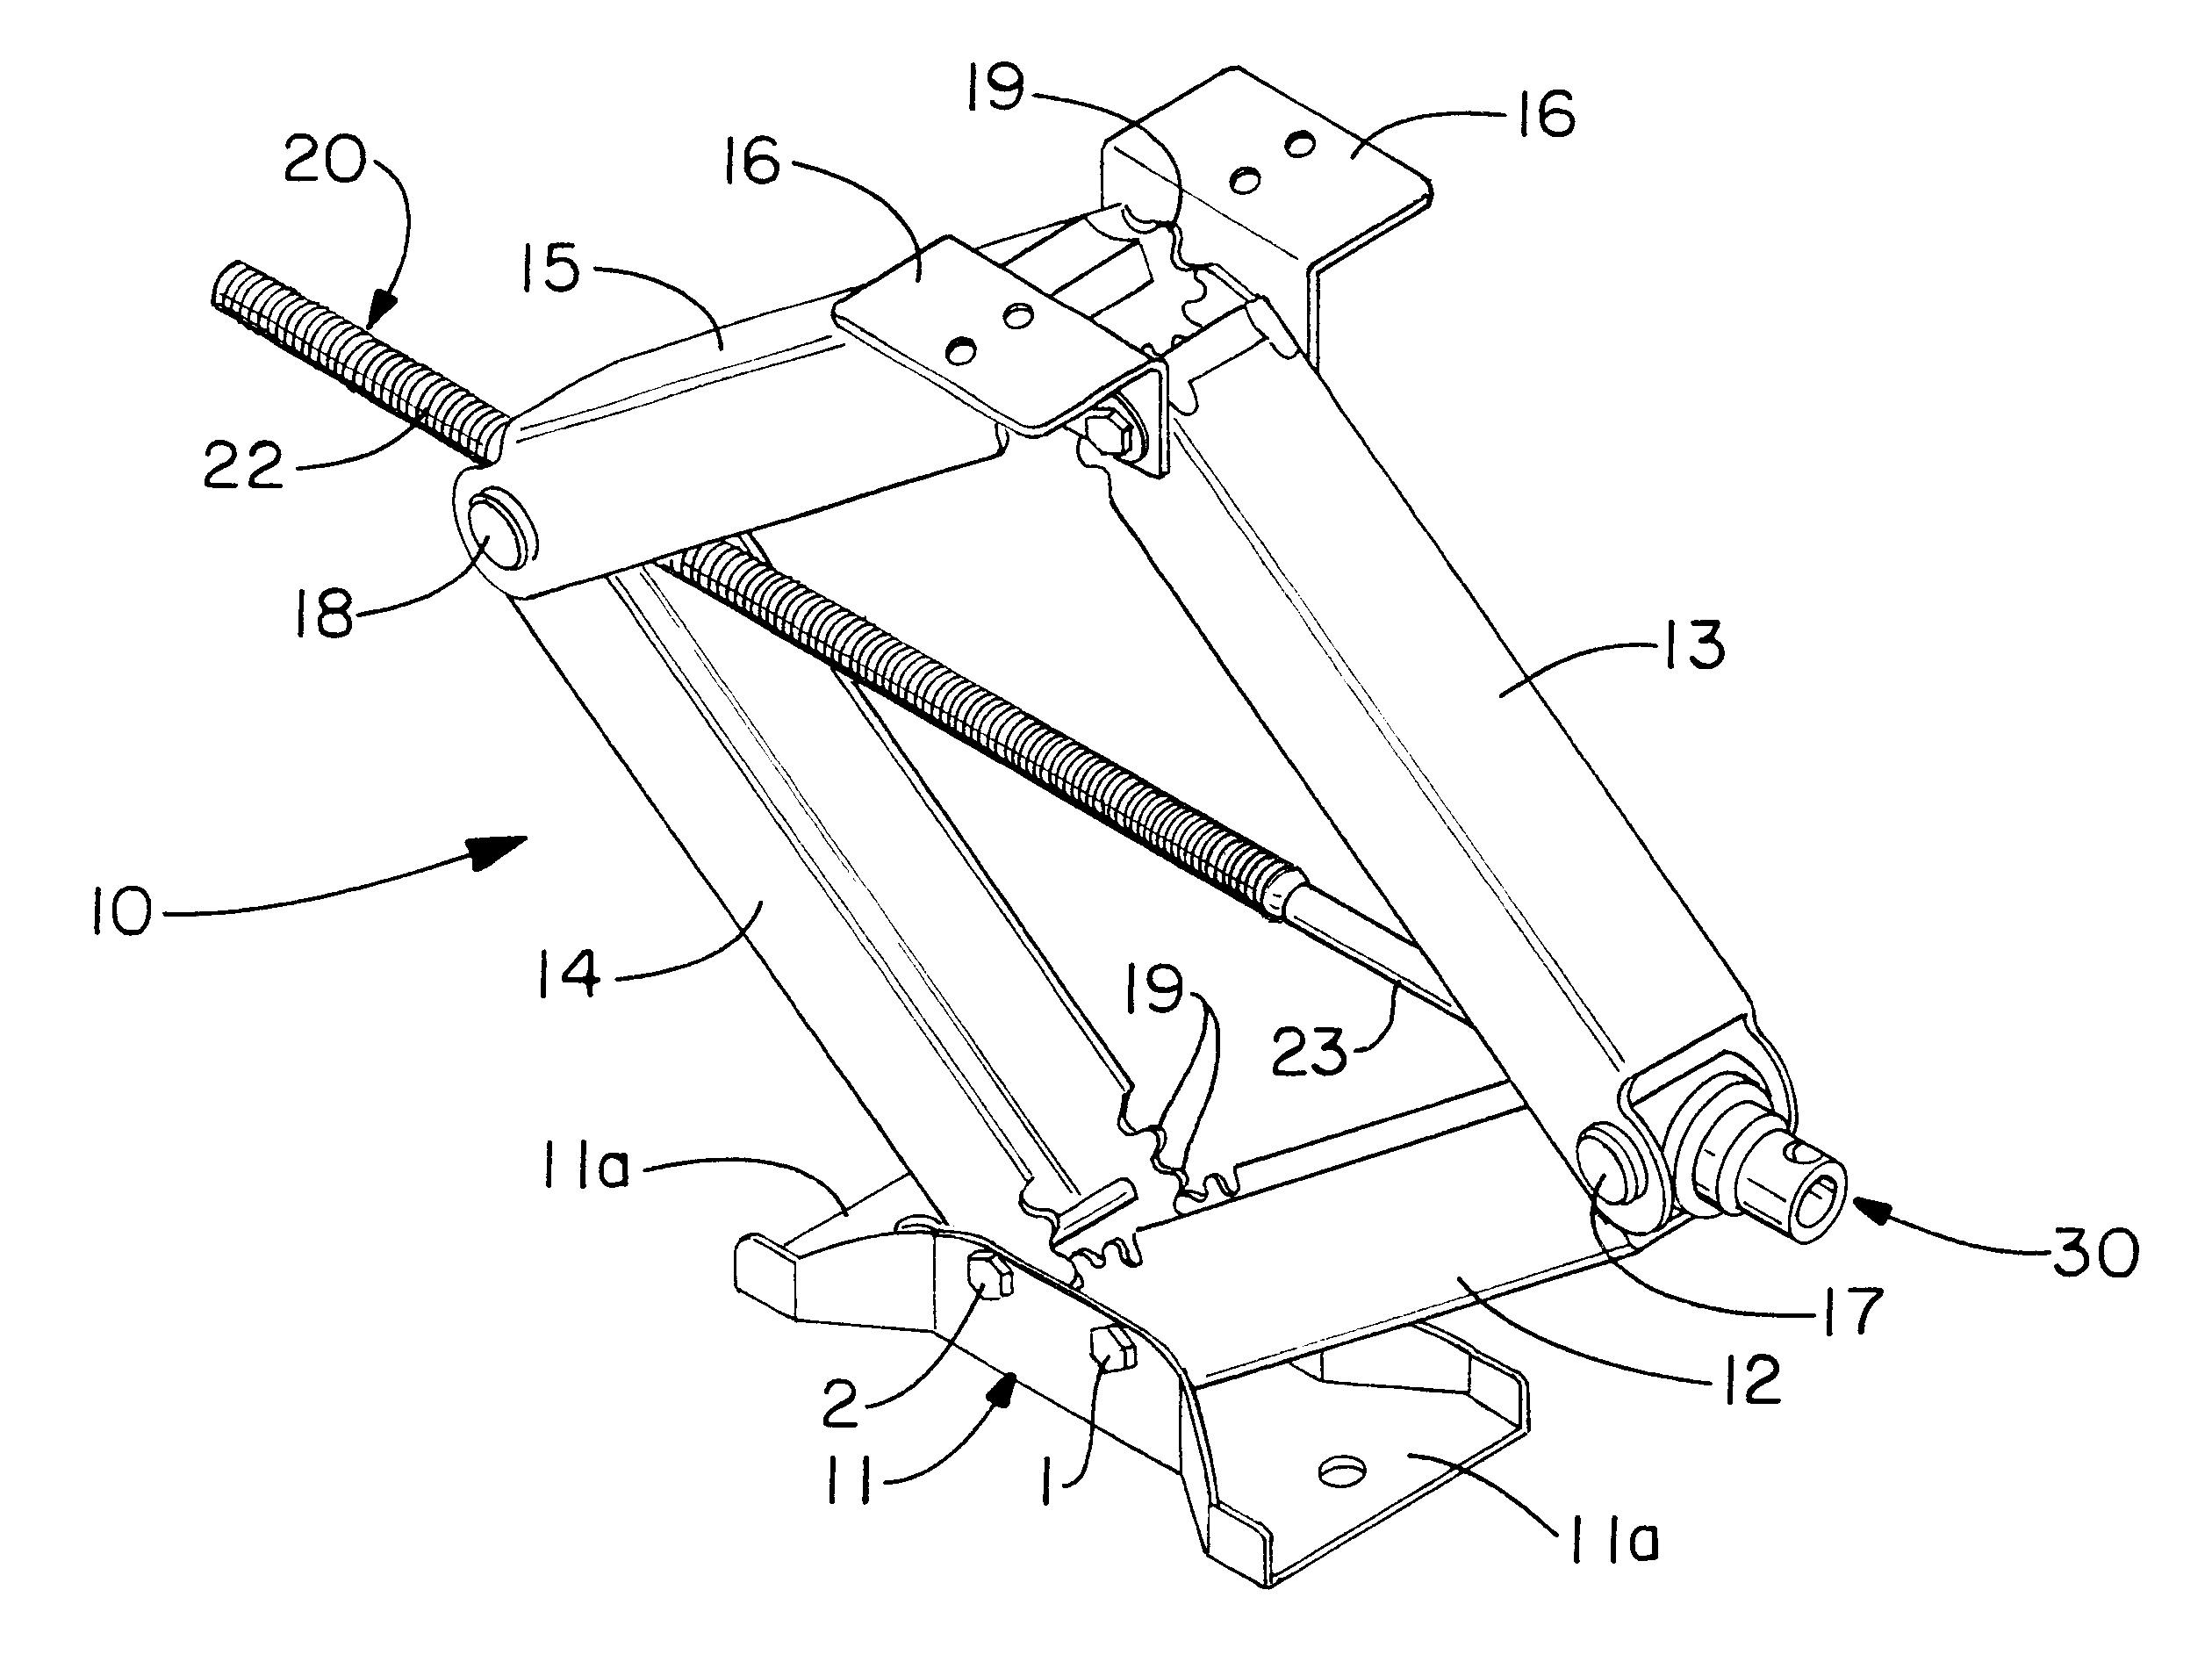 Scissor jack patent drawing